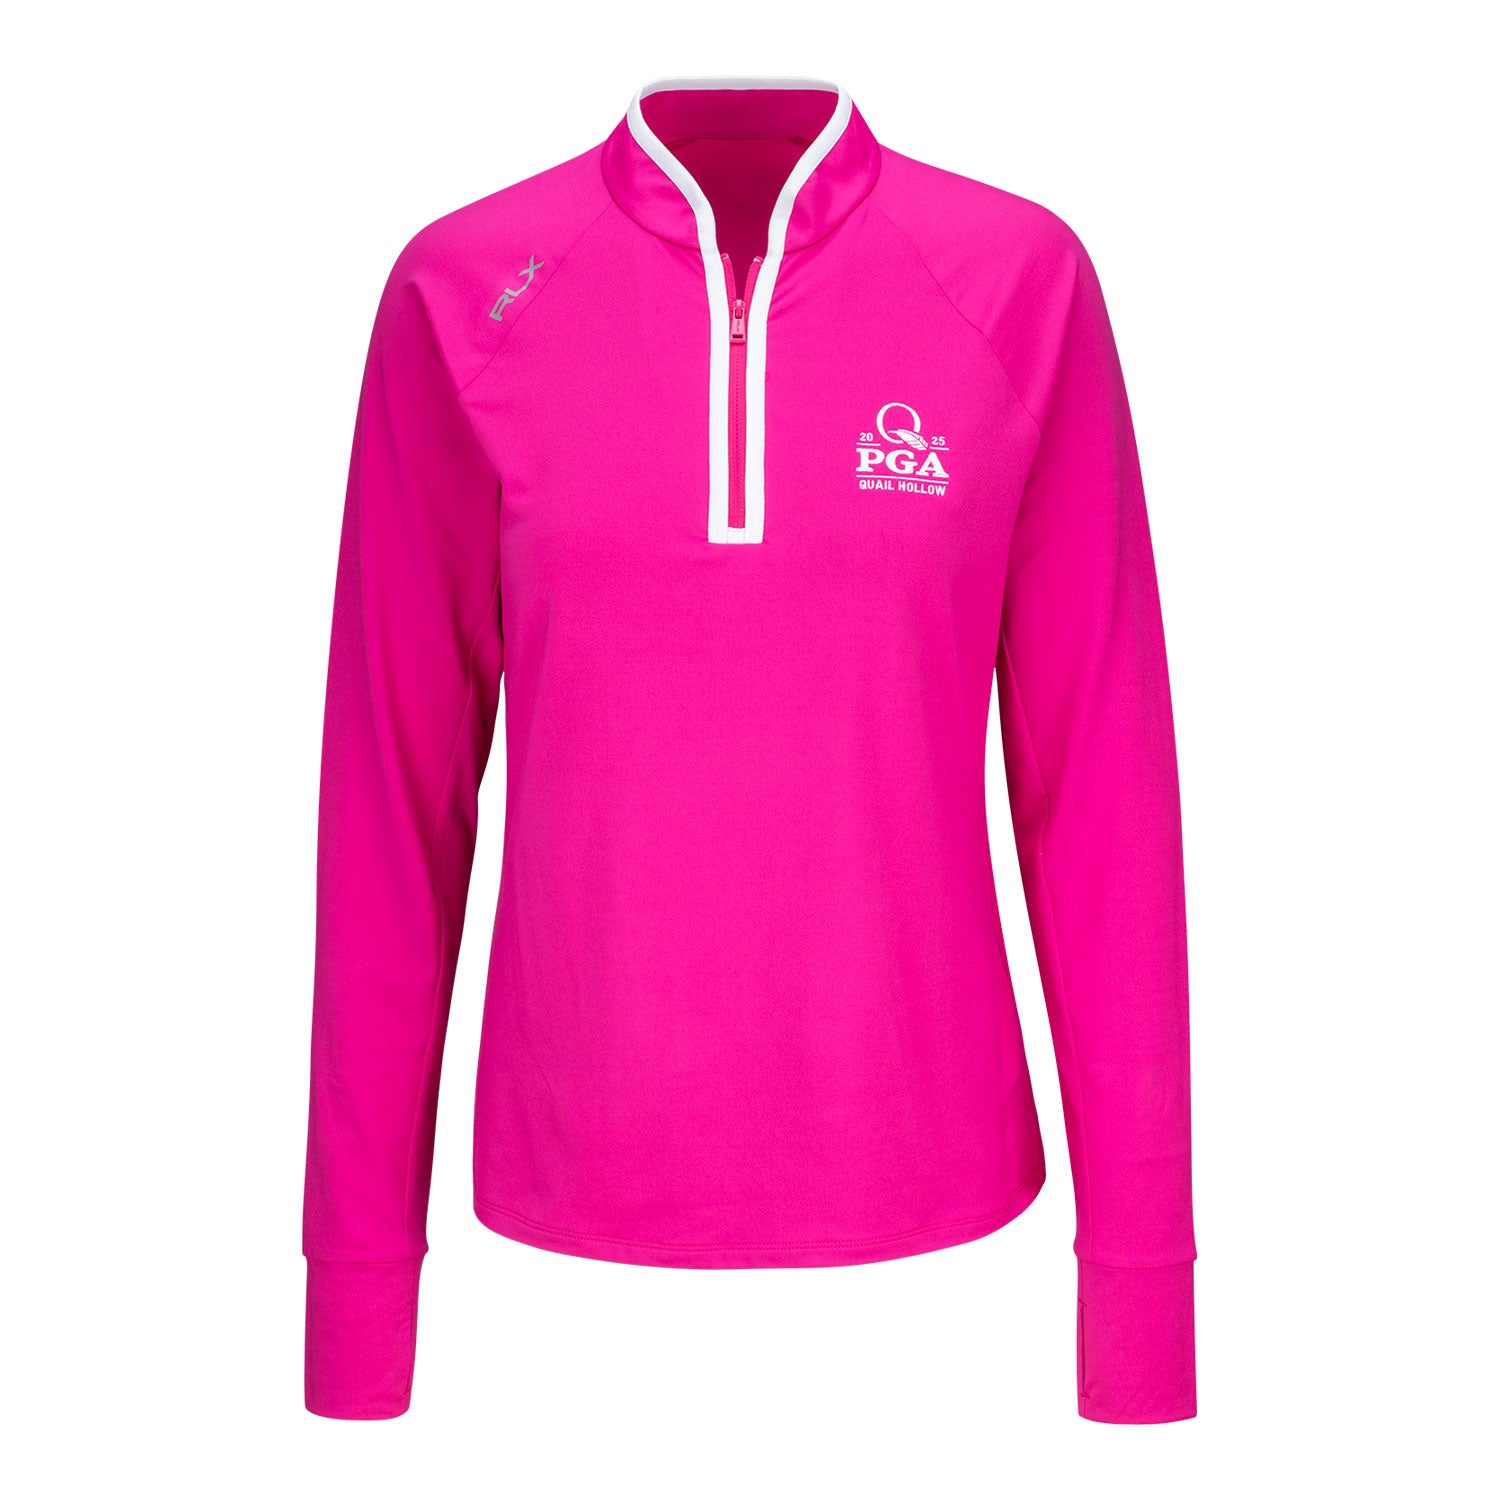 Ralph Lauren 2025 PGA Championship Women's Peached Jersey Quarter Zip in Bright Pink - Front View